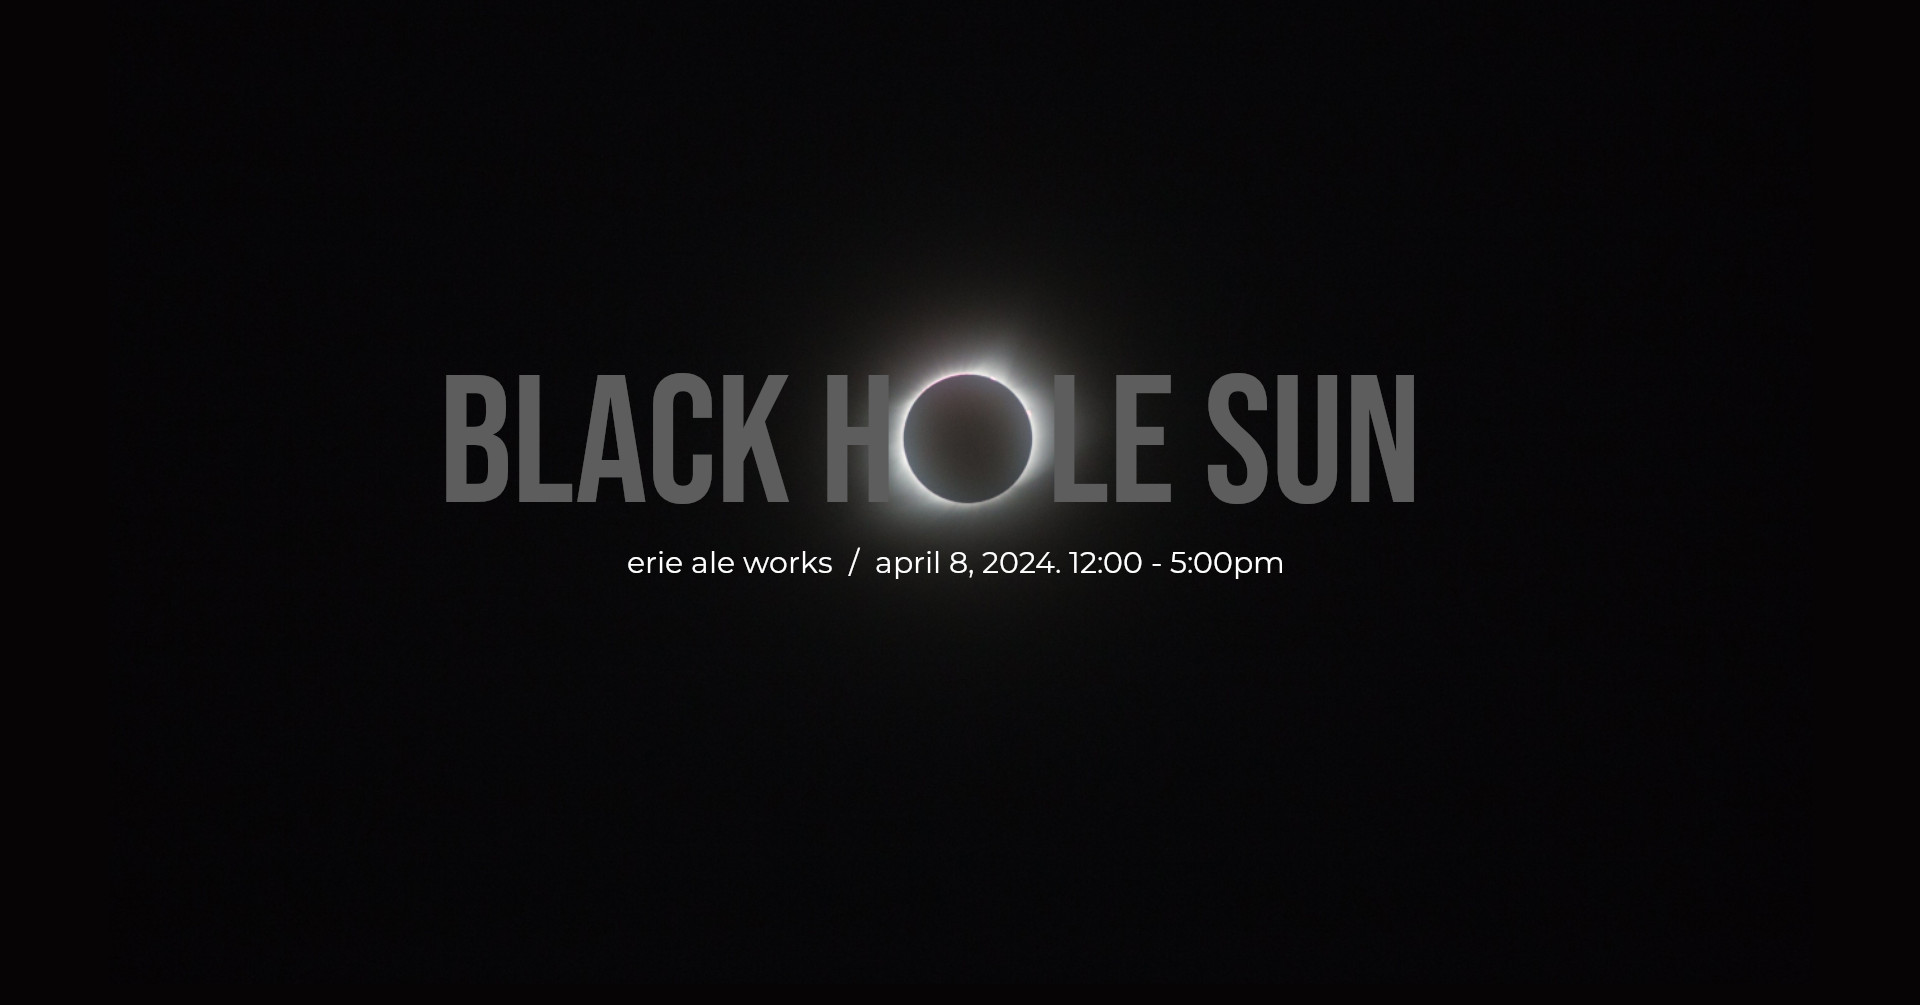 Black Hole Sun at Erie Ale Works